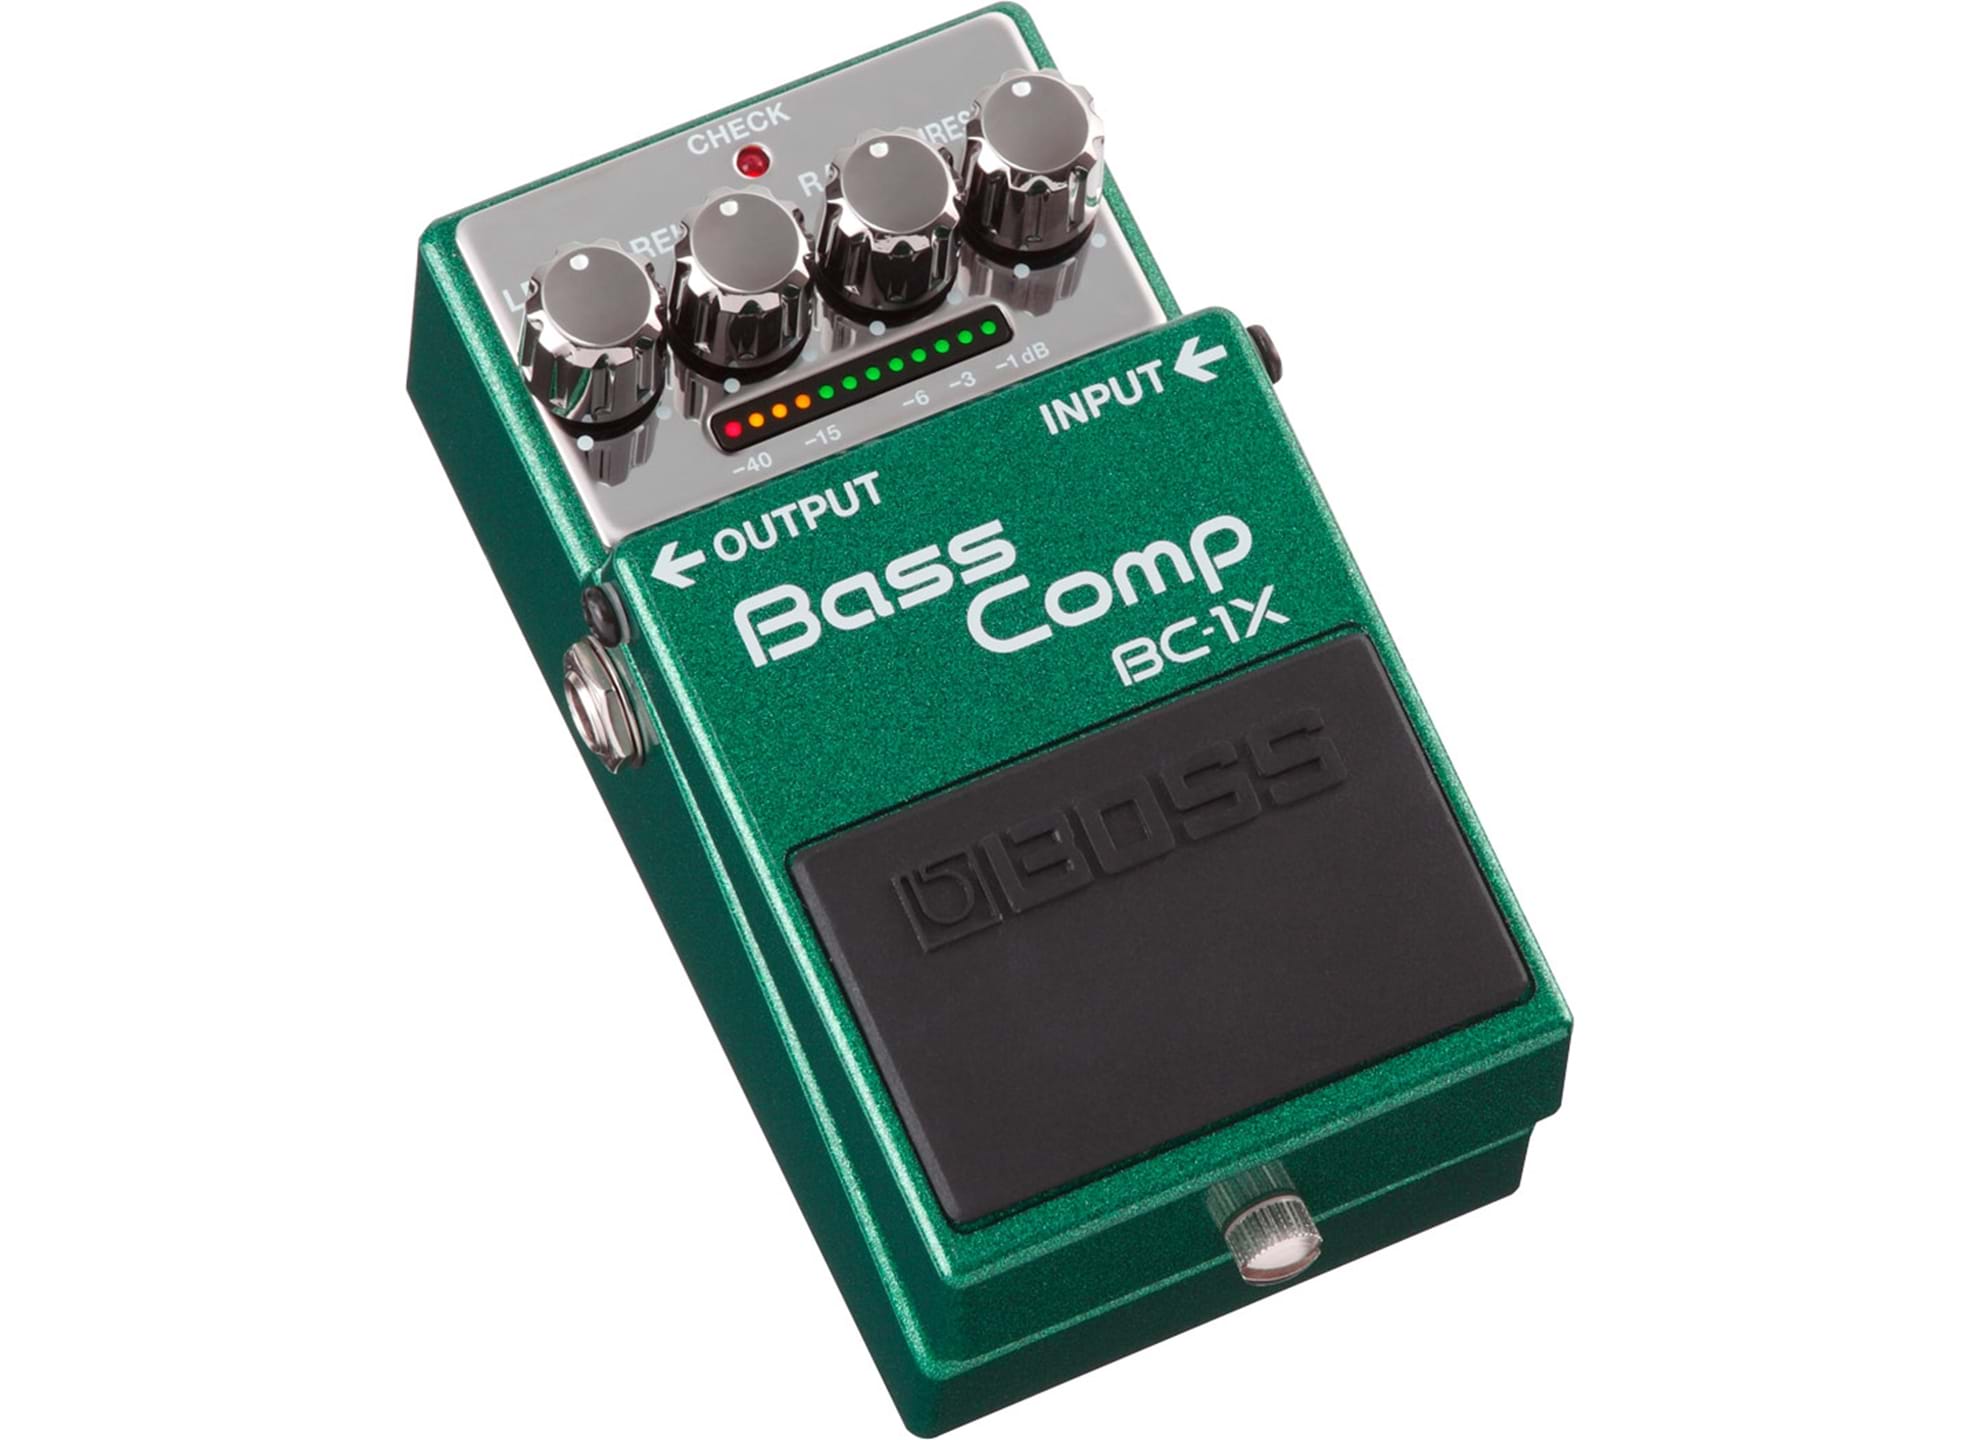 BC-1X Bass Multi Comp